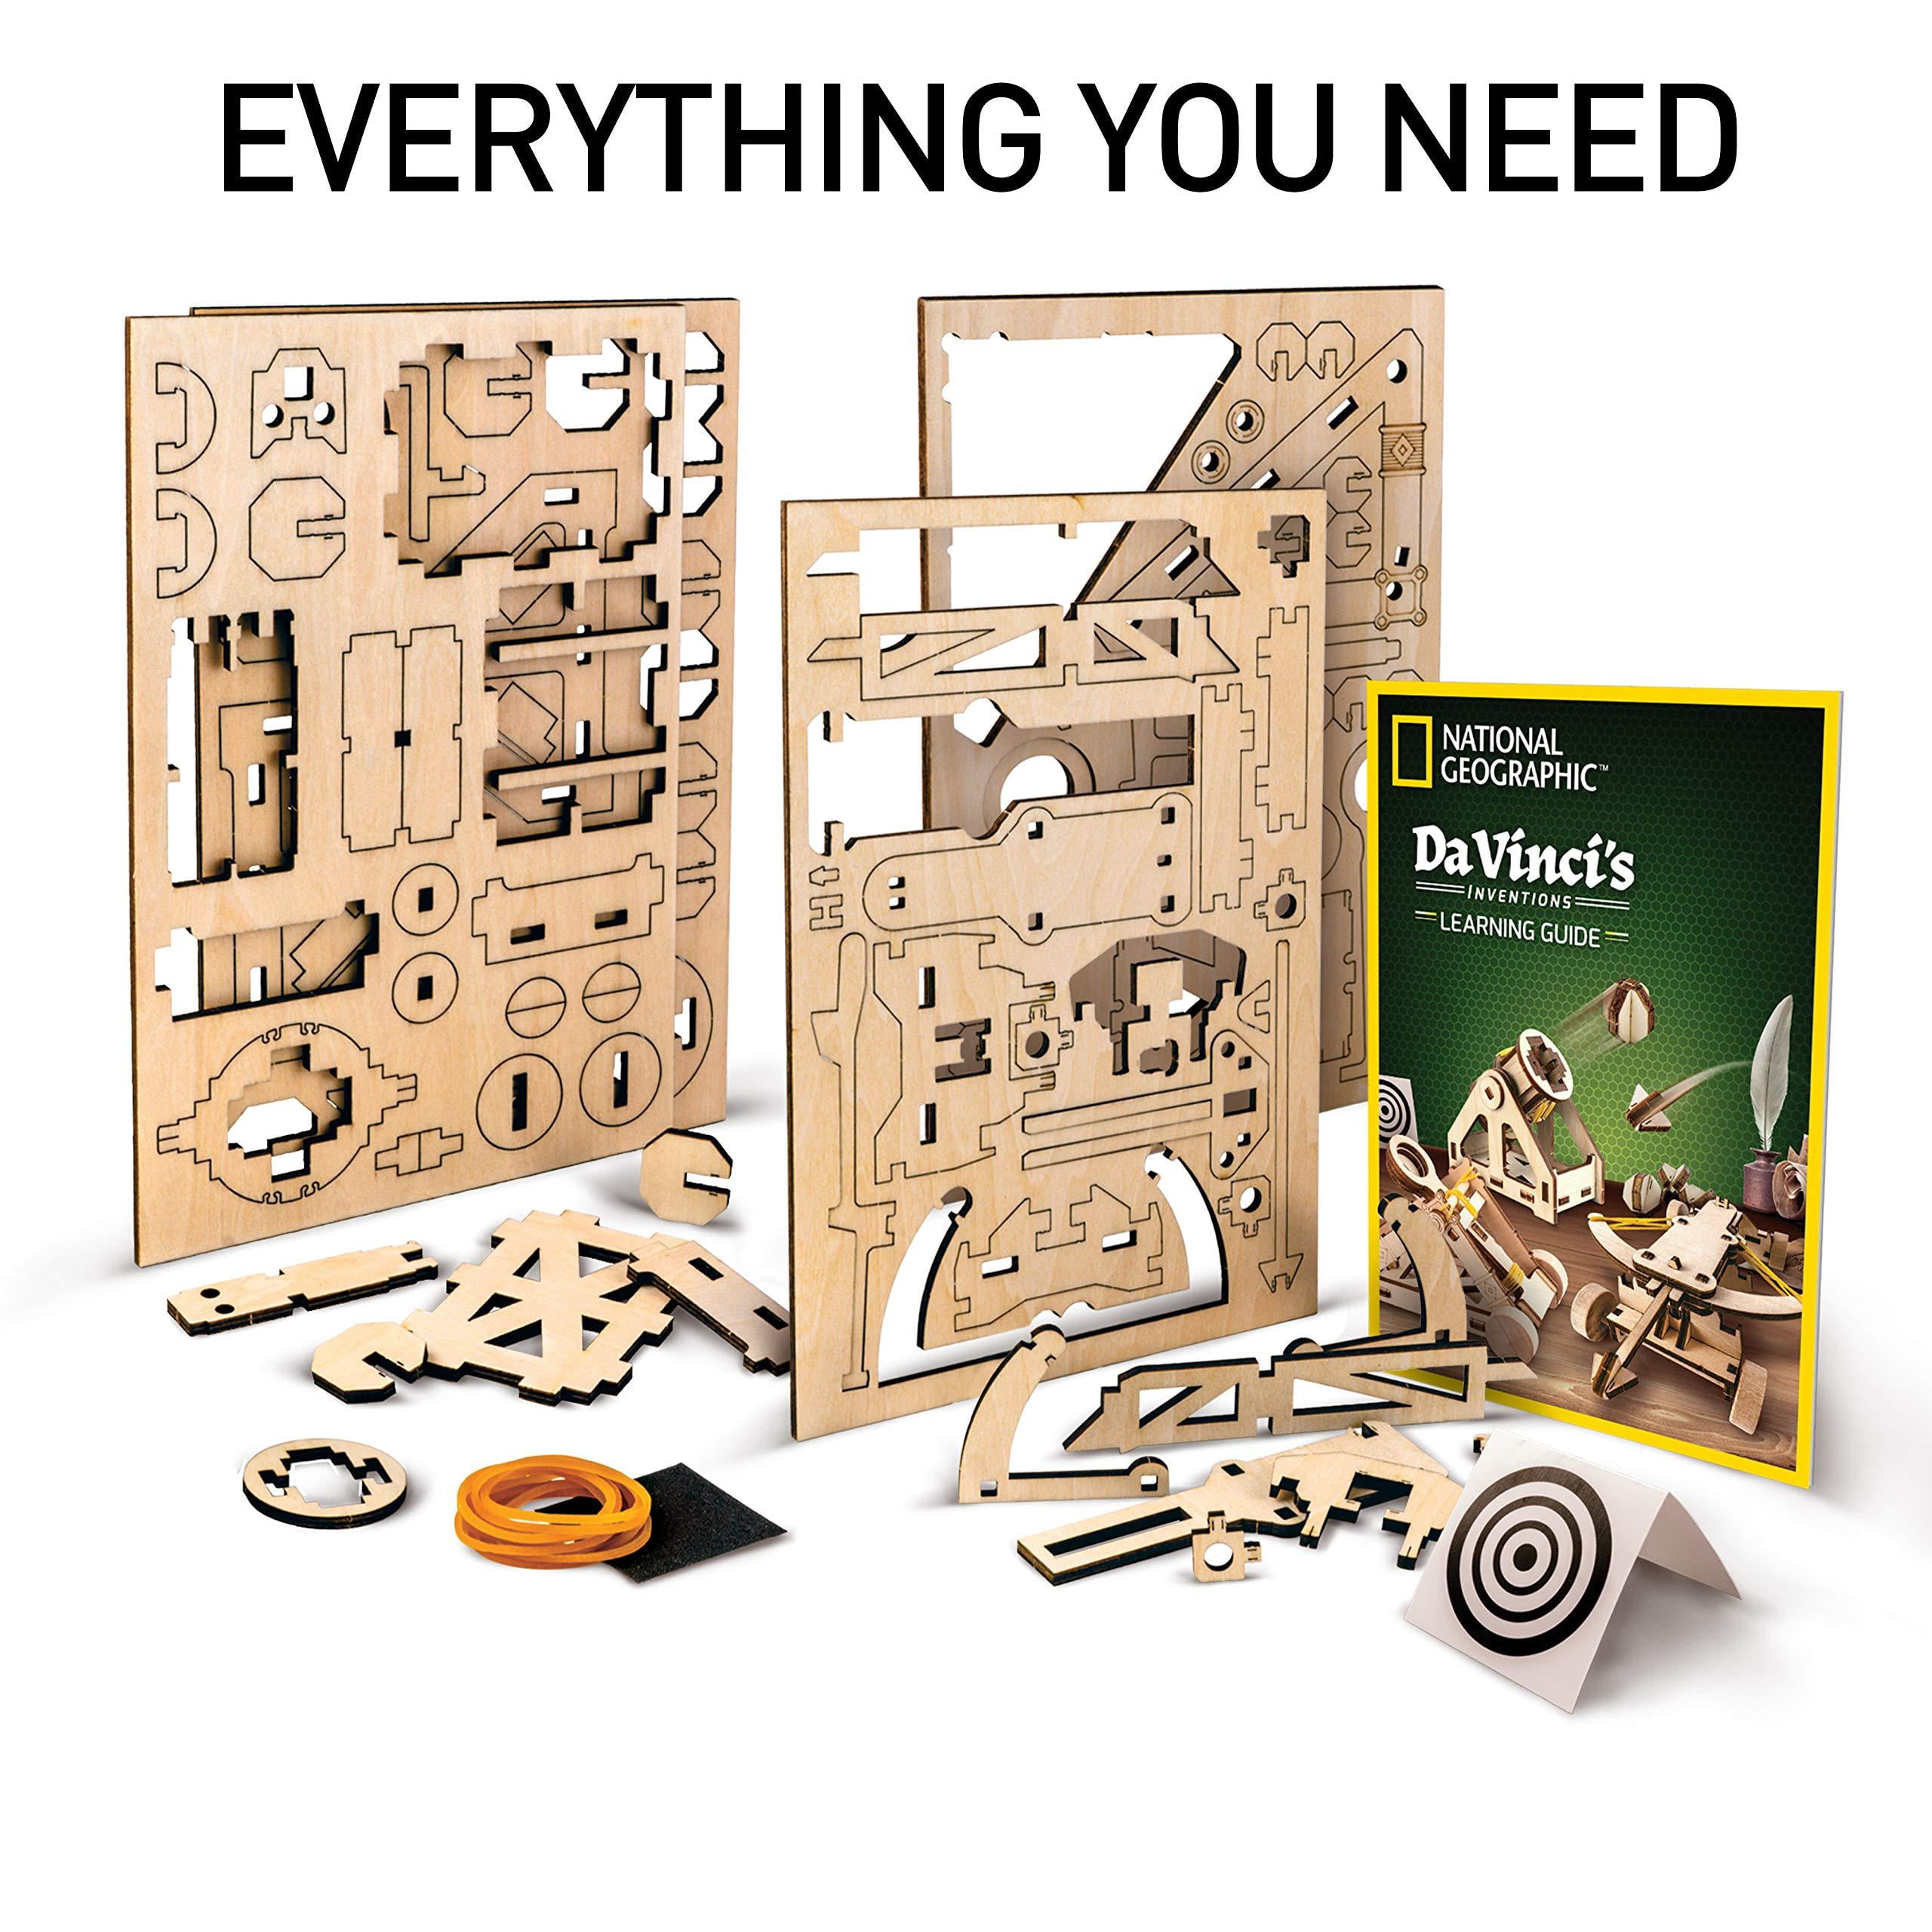 NATIONAL GEOGRAPHIC Construction Model Kit – Build 3 Wooden 3D Puzzle  Models, Learn about Da Vinci’s Improved Designs Battalion